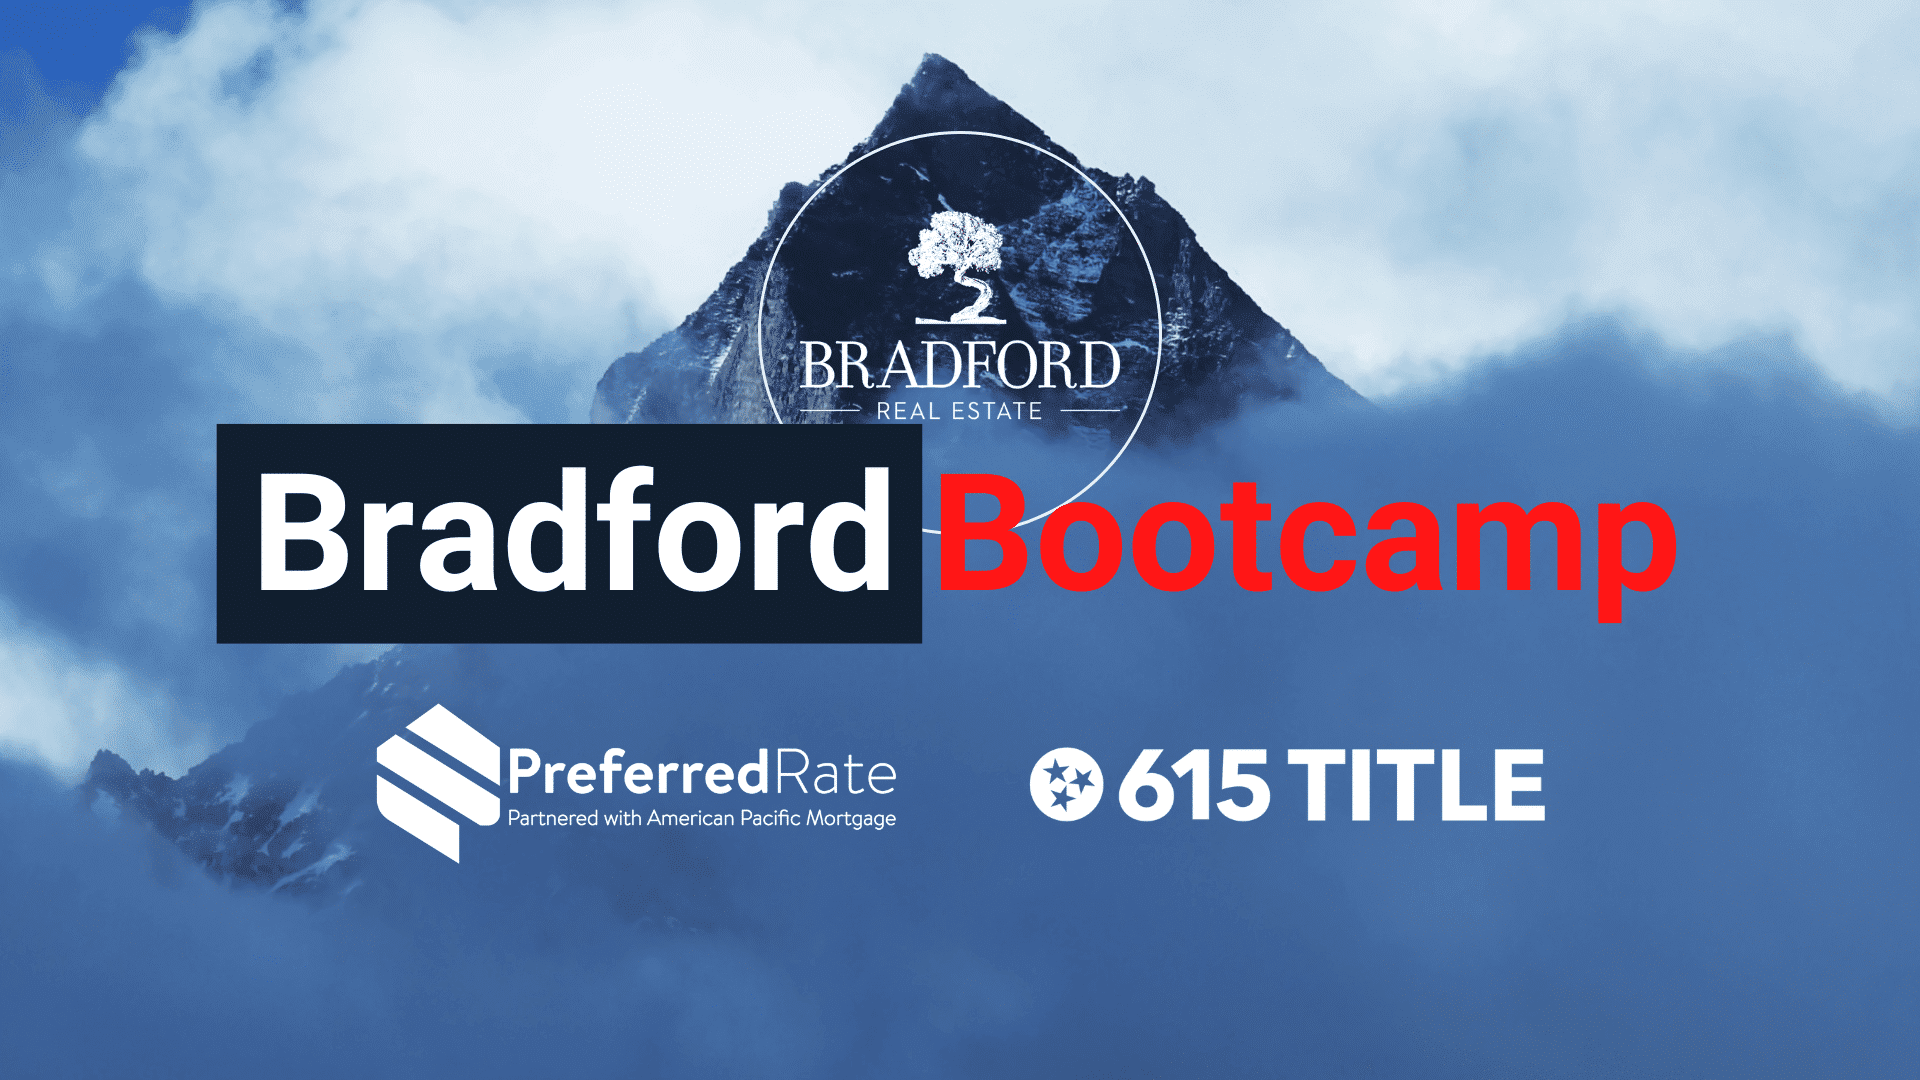 Bradford Bootcamp